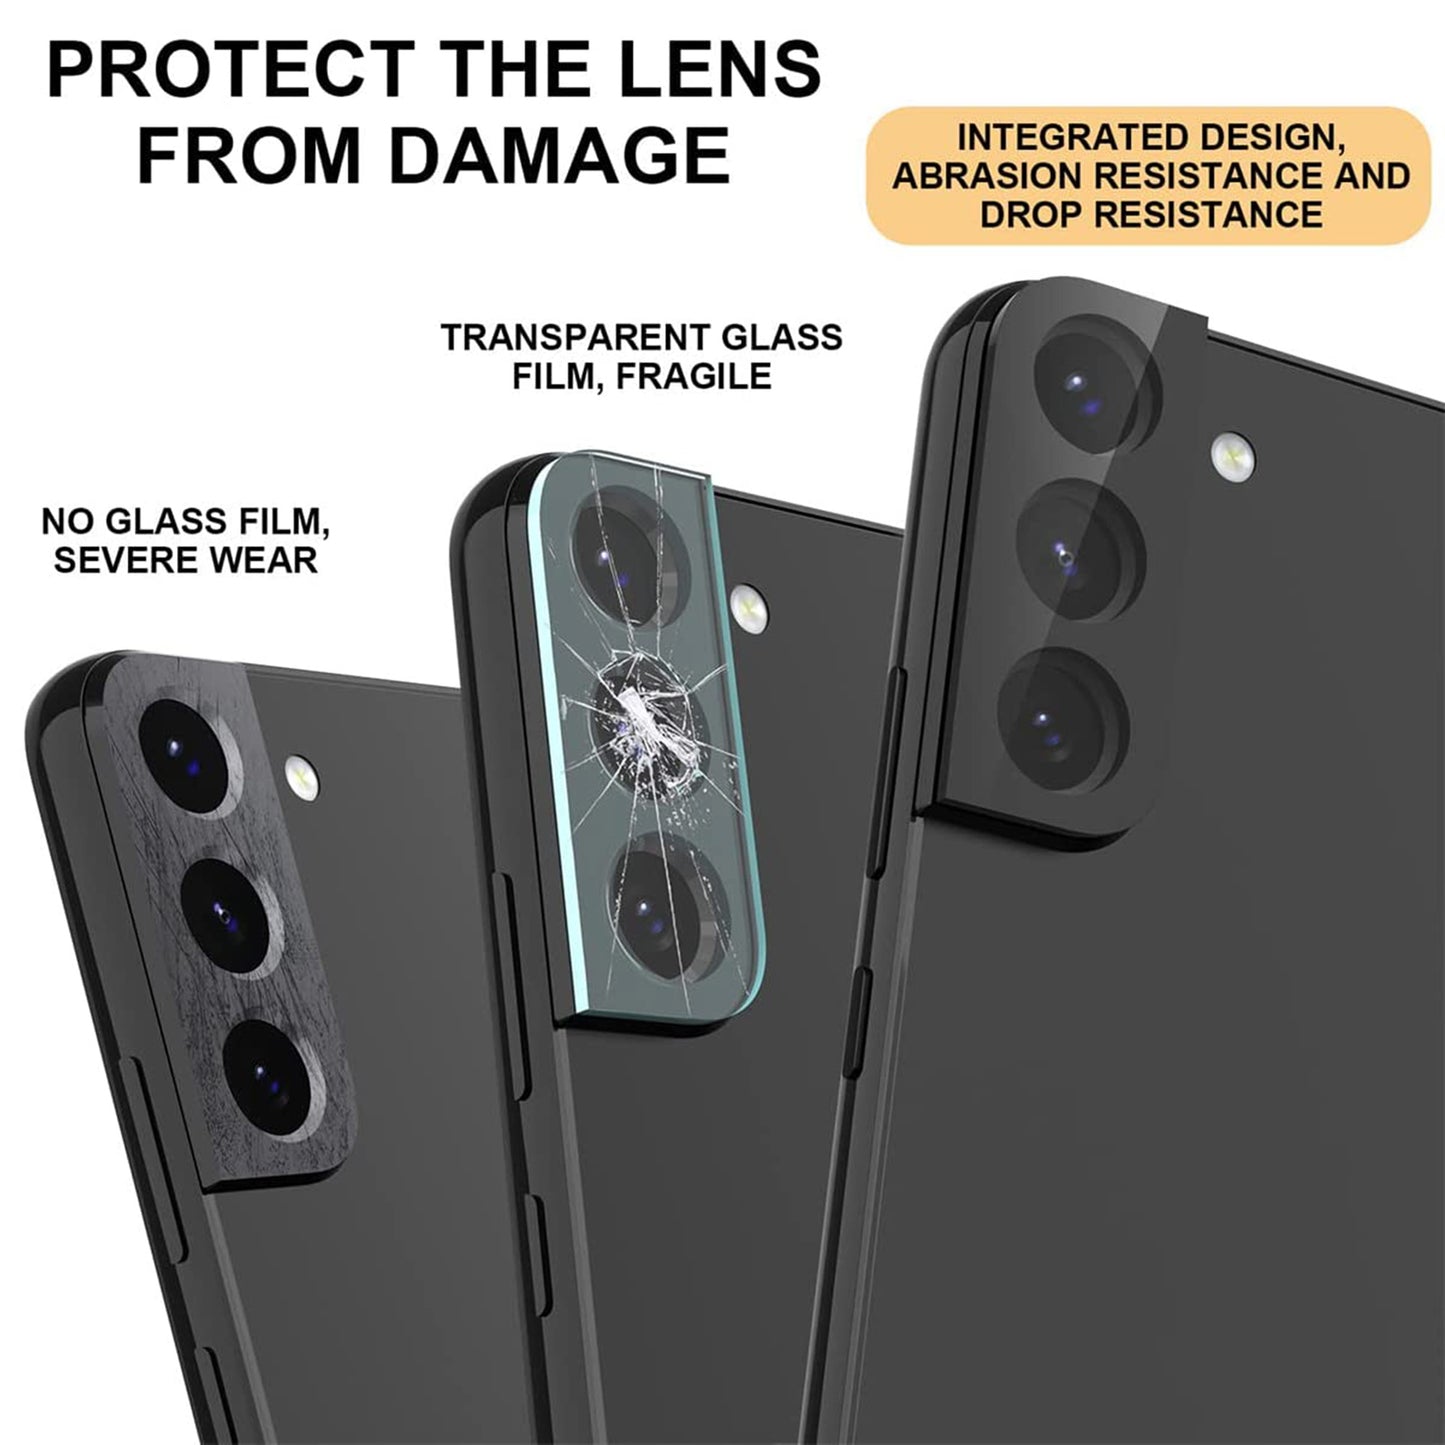 [2 Pack] MEZON Samsung Galaxy S21 FE 5G Premium Full Coverage Camera Lens Tempered Glass (S21 FE, Lens HD)